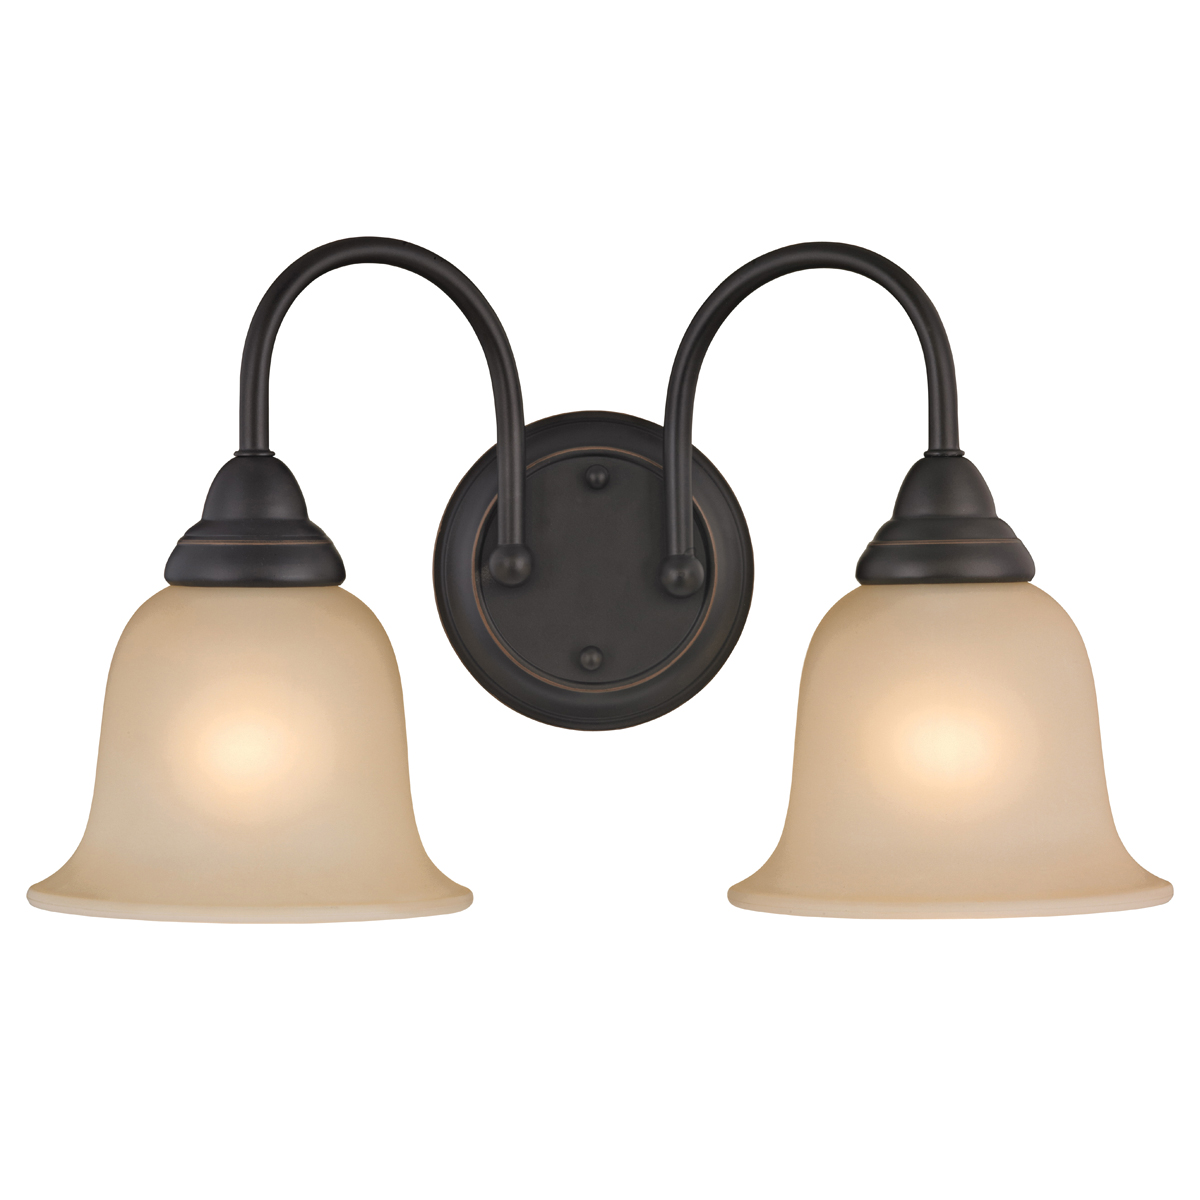 LYB130928-2VL-VB Vanity Light Fixture, 60 W, 2-Lamp, A19 or CFL Lamp, Steel Fixture